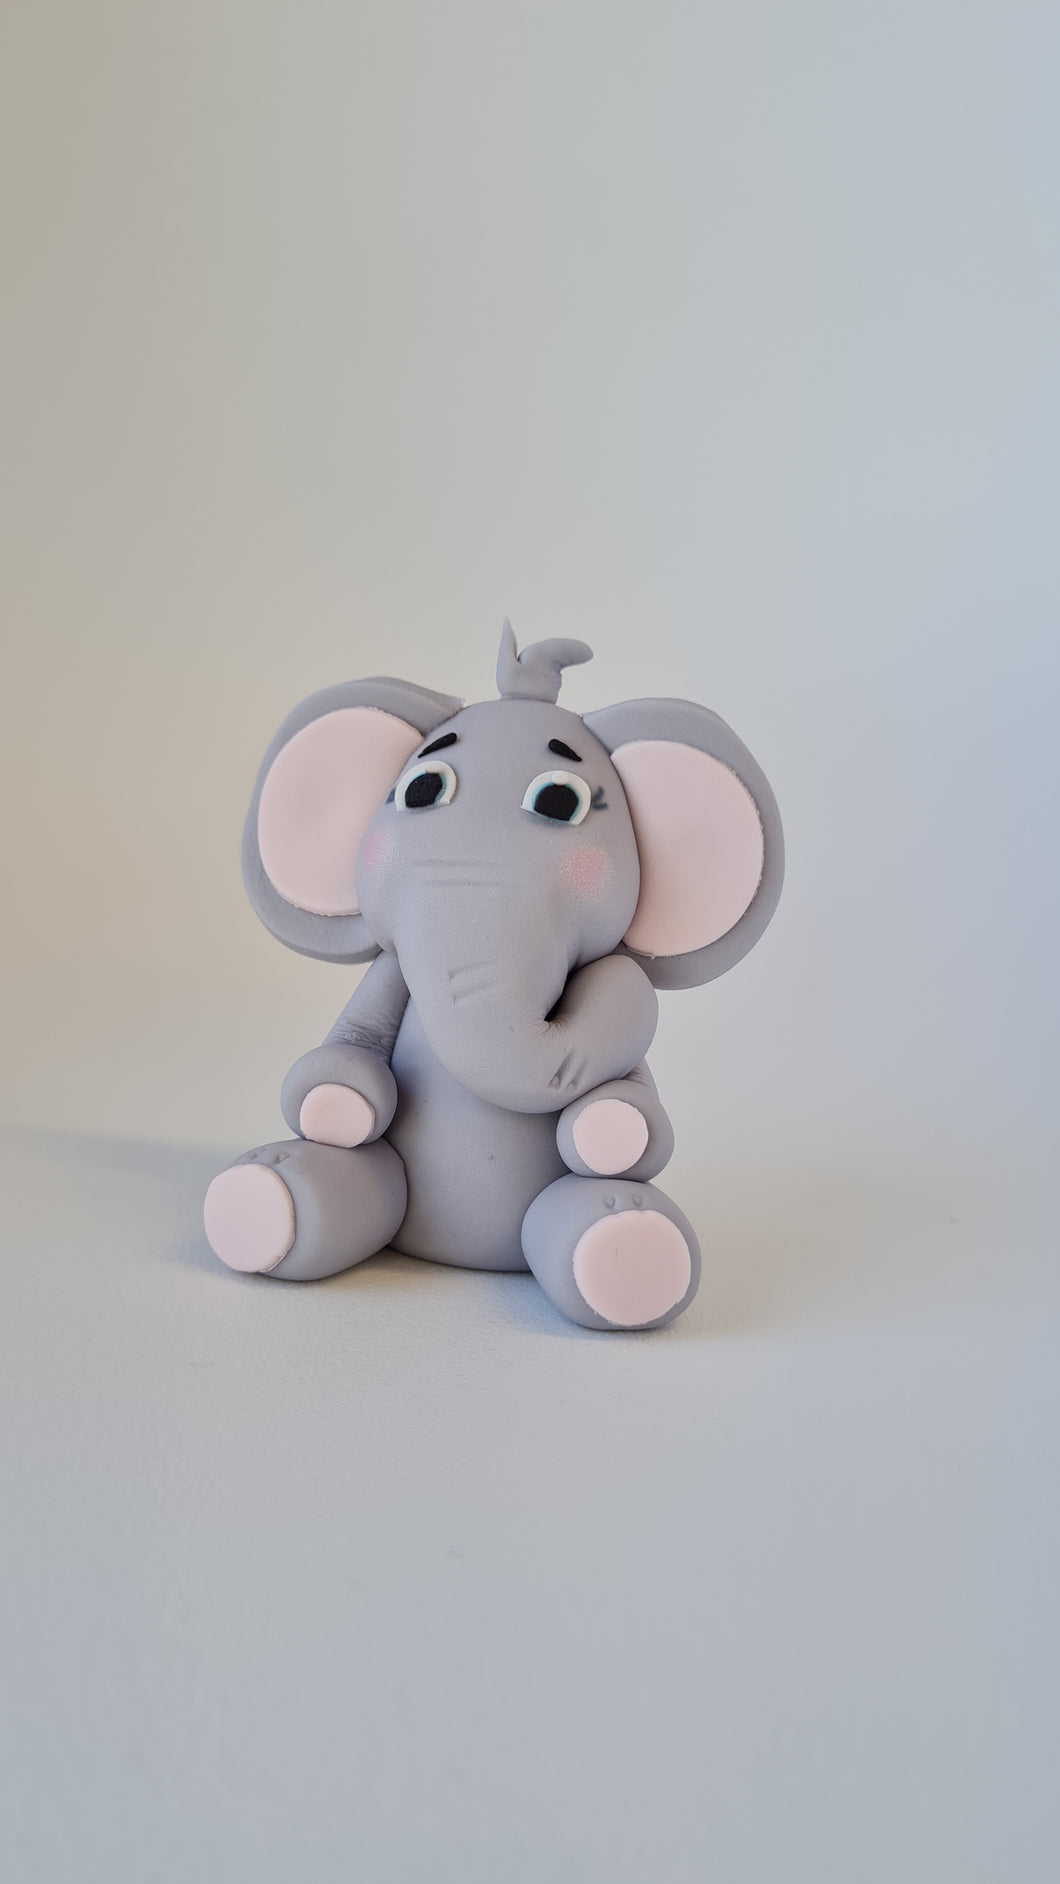 Elephant - Grey